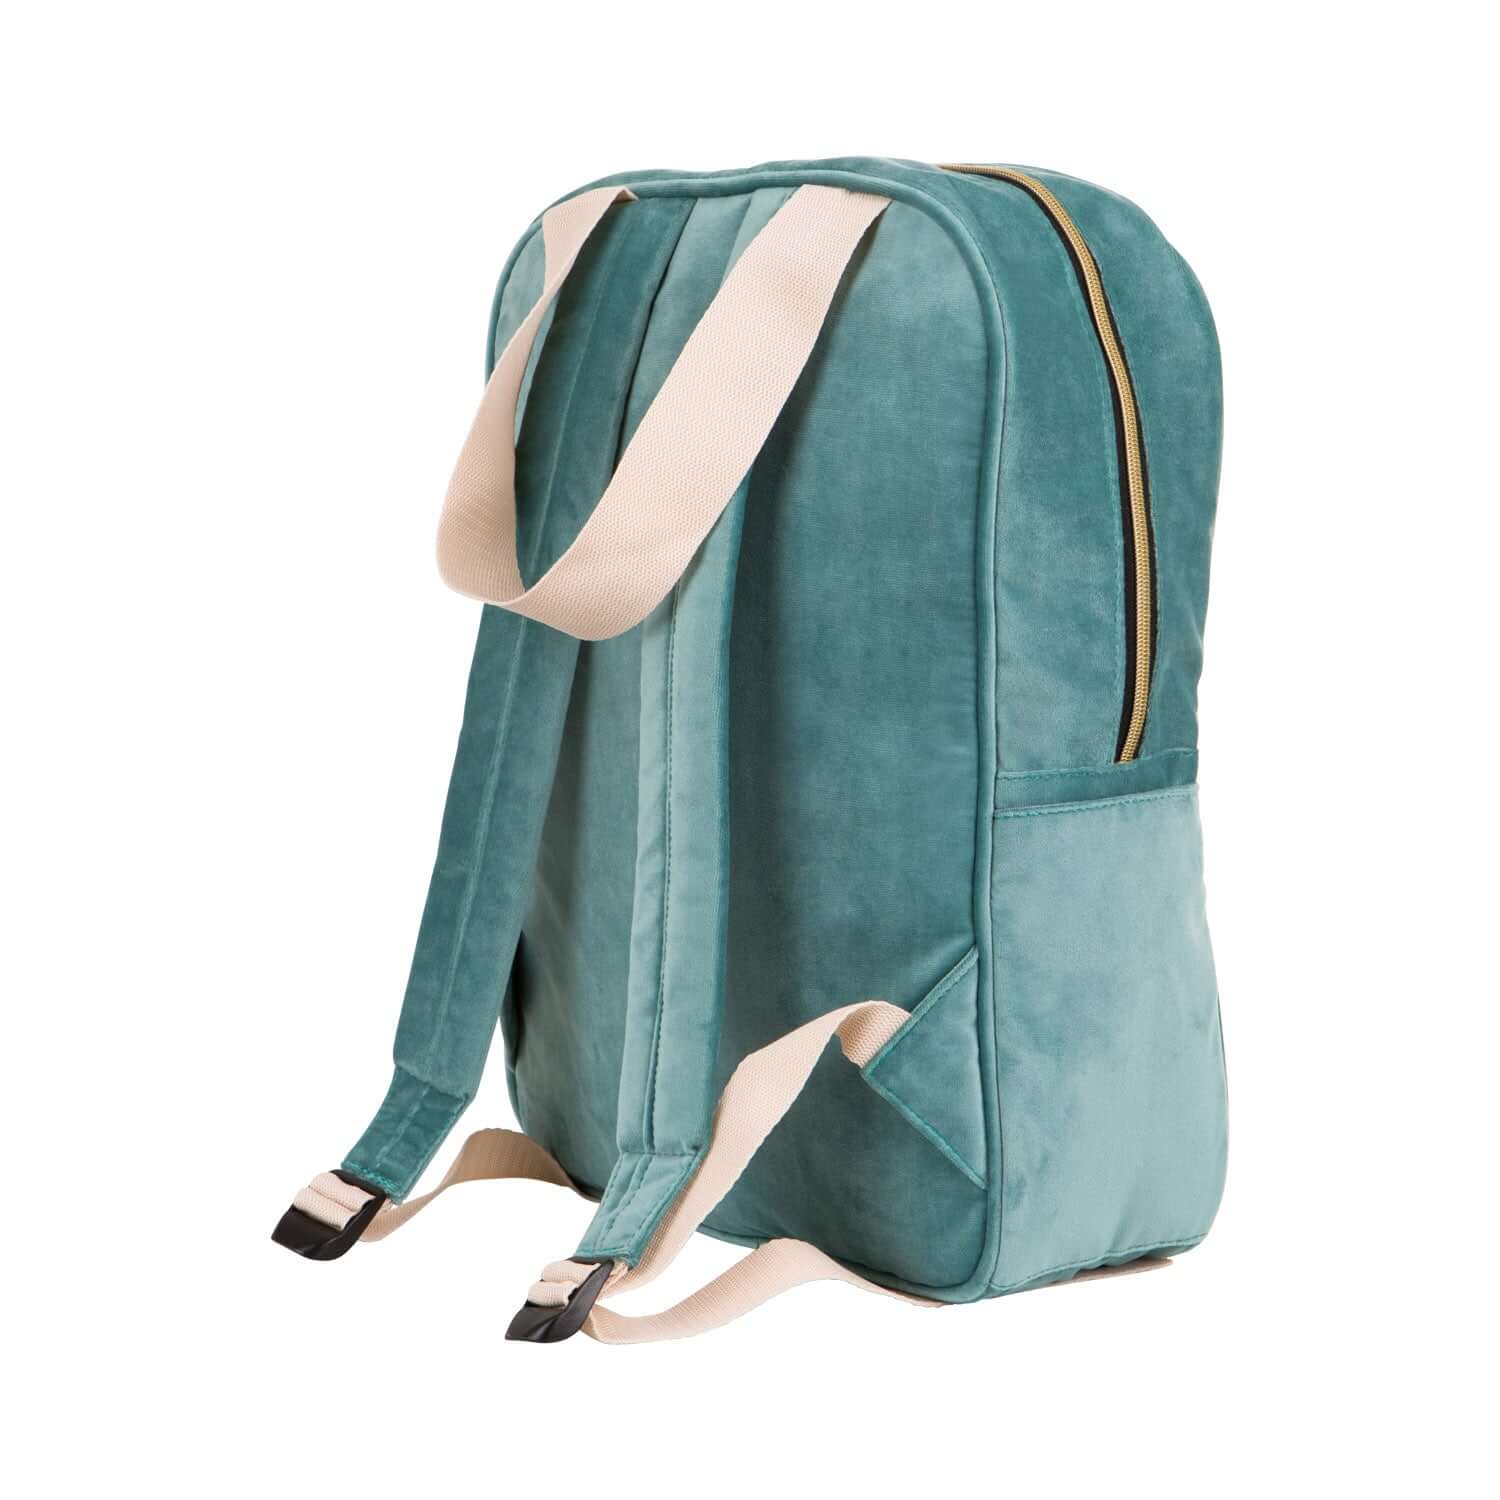 mint velvet backpack by bettys home  back to school backpacks for high schoolers  